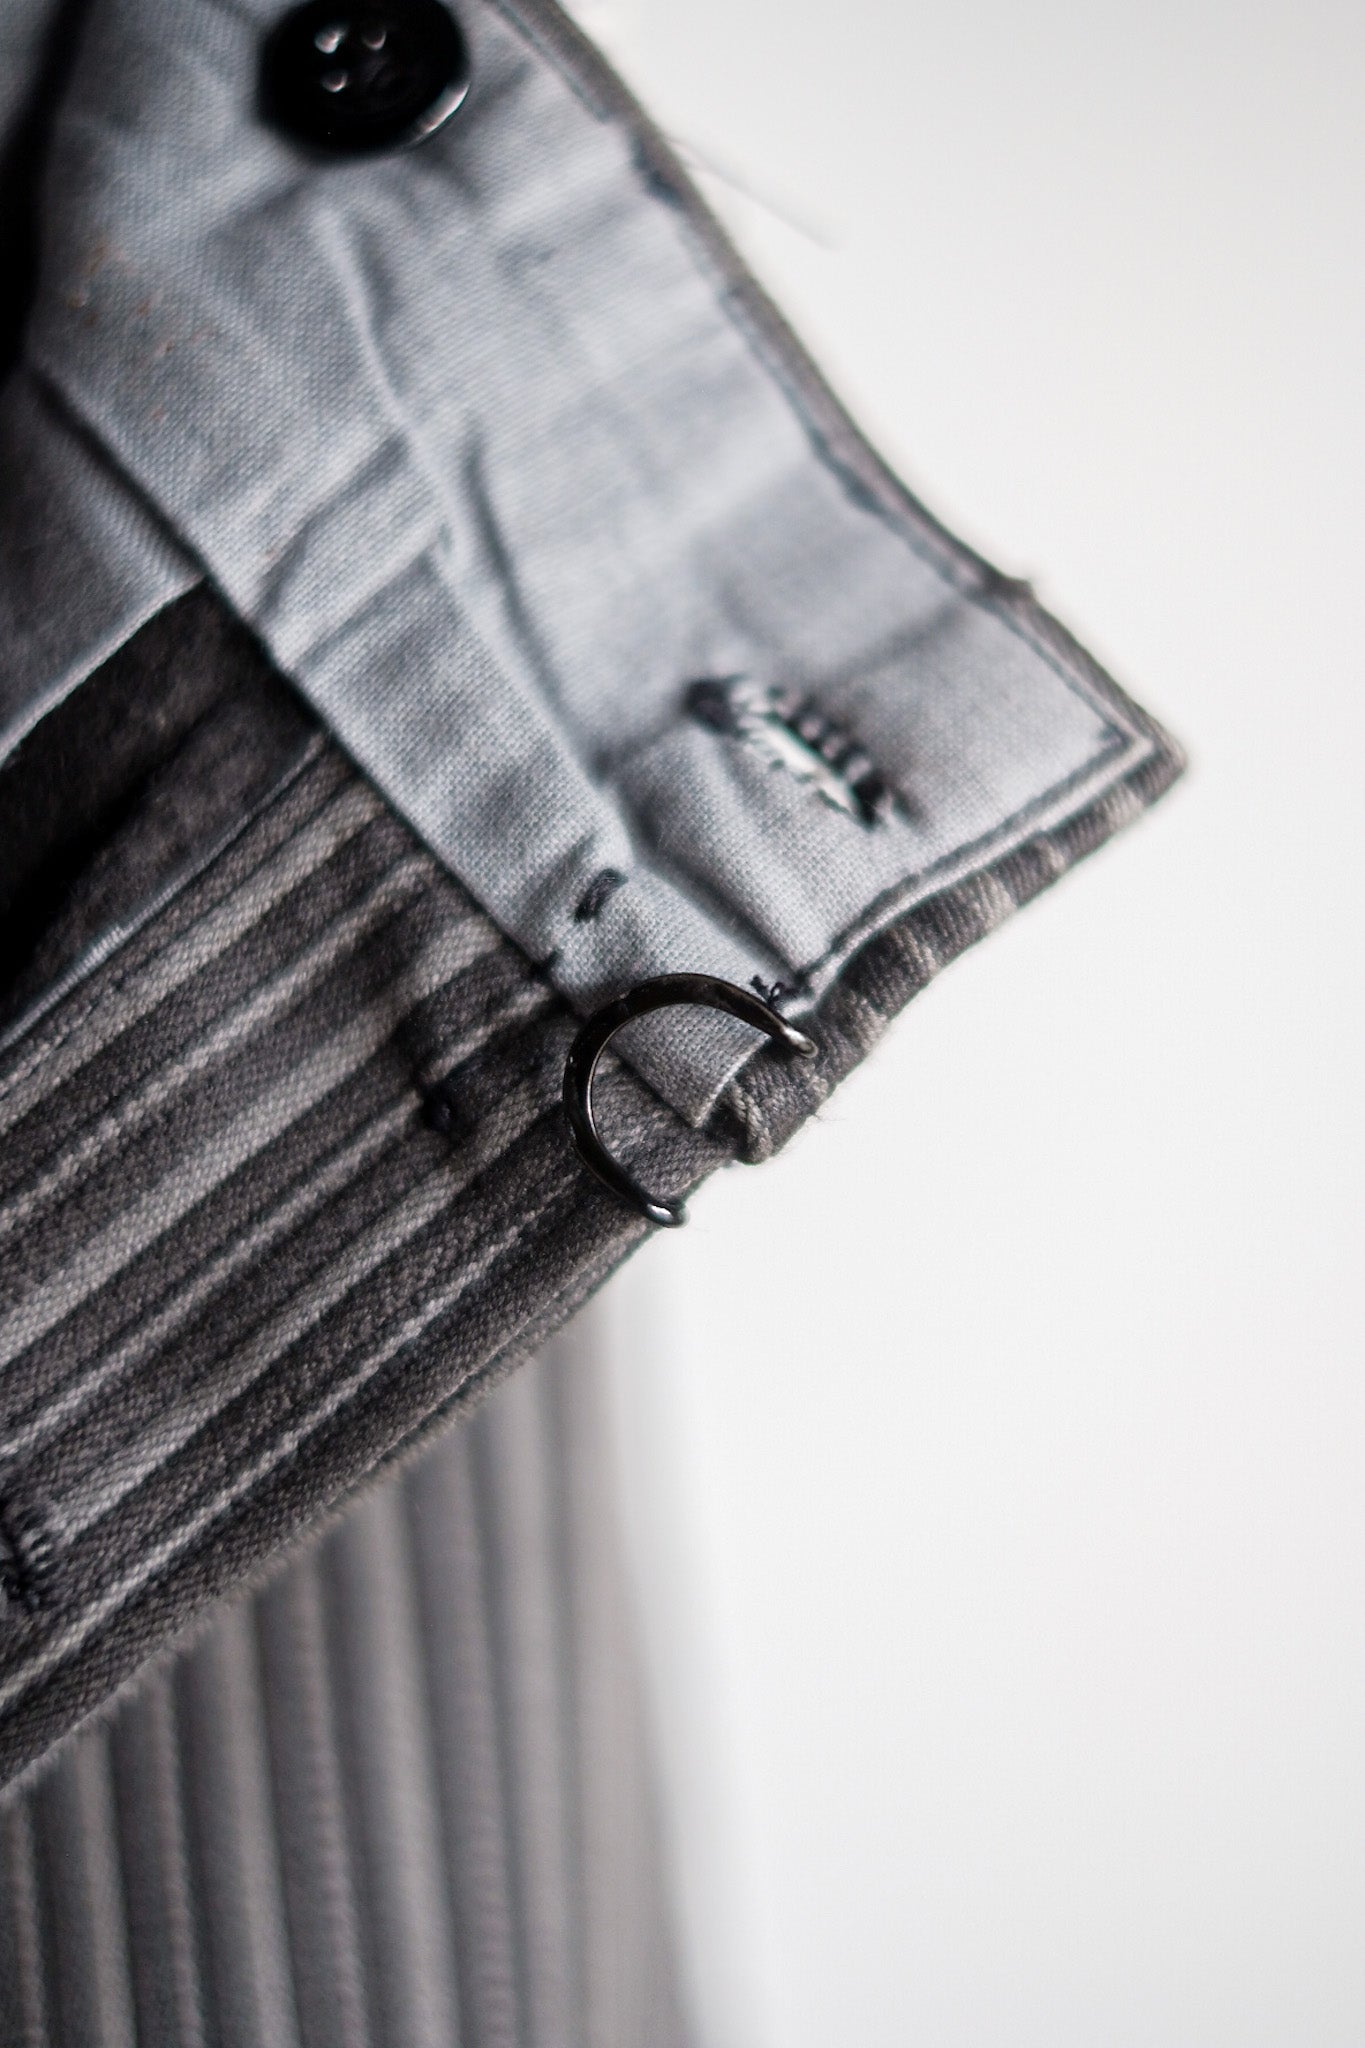 [~ 40's] French Vintage Cotton Pique Striped Work Pants "DEAD STOCK"